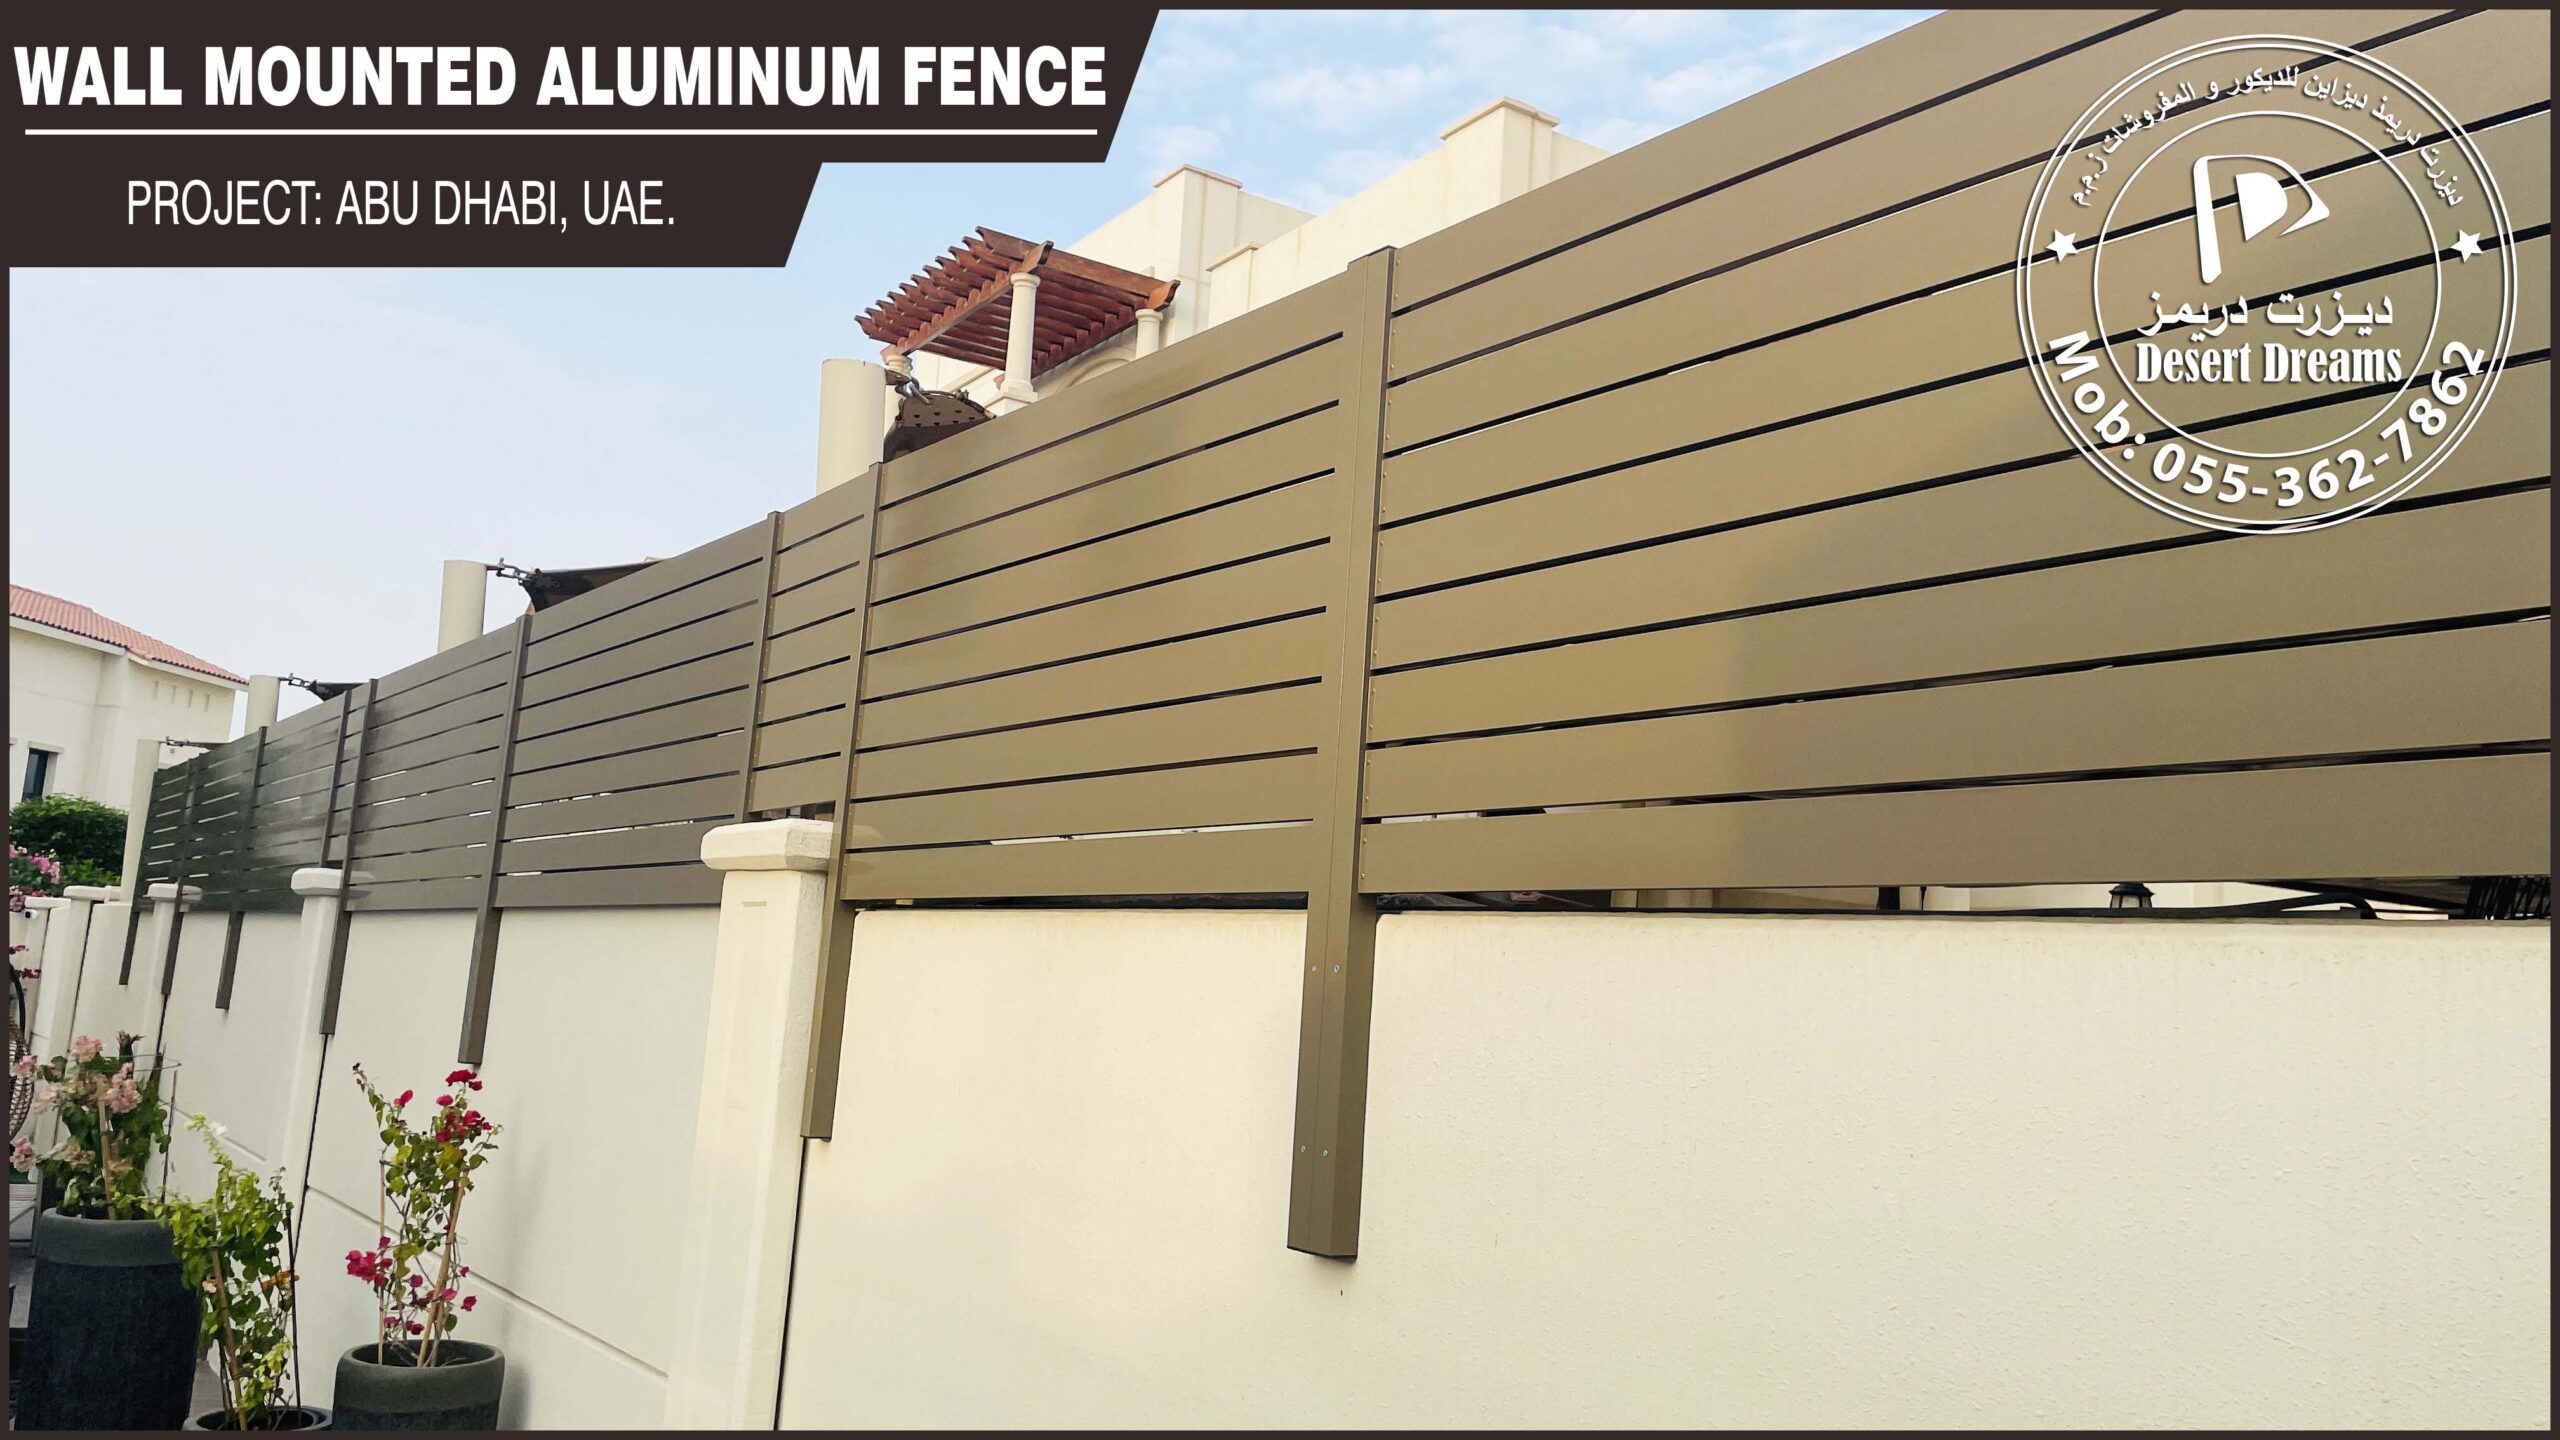 Wall Mounted Aluminium Fences in UAE.jpg